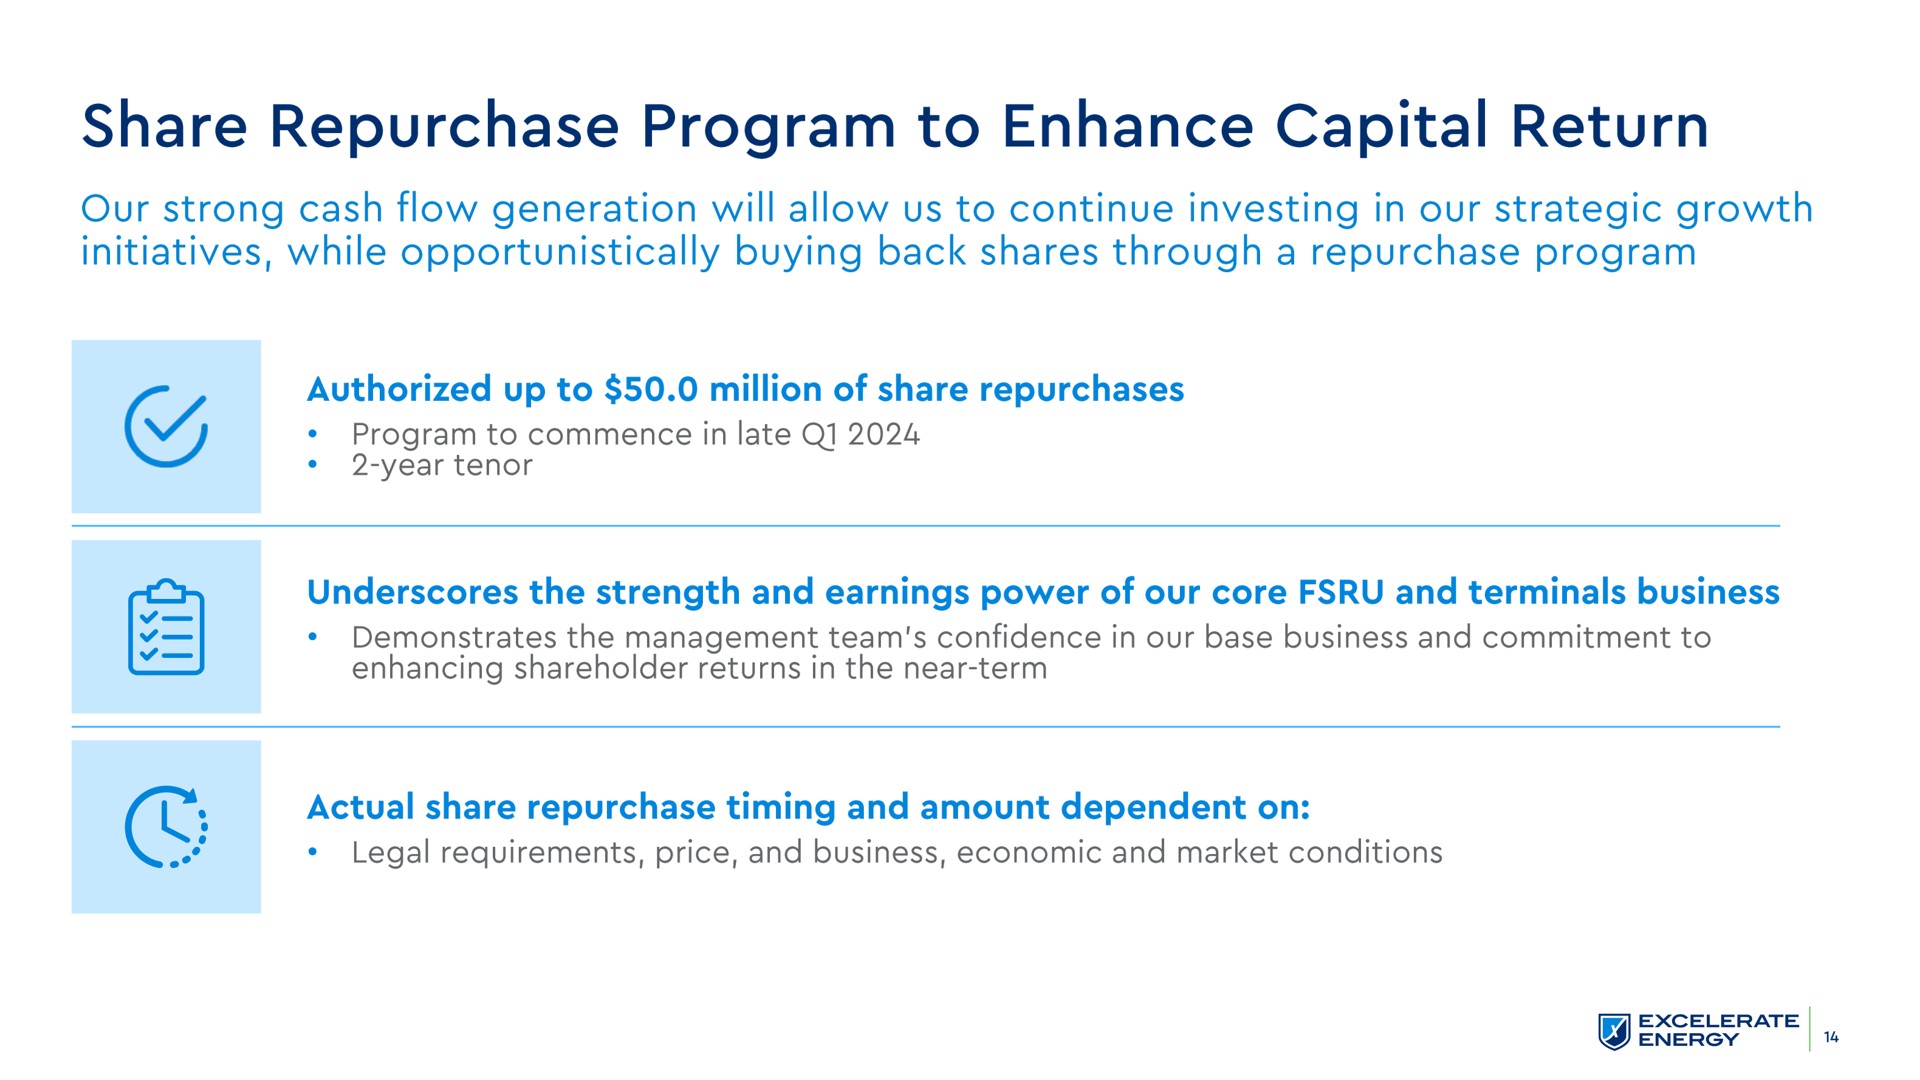 share repurchase program to enhance capital return | Excelerate Energy